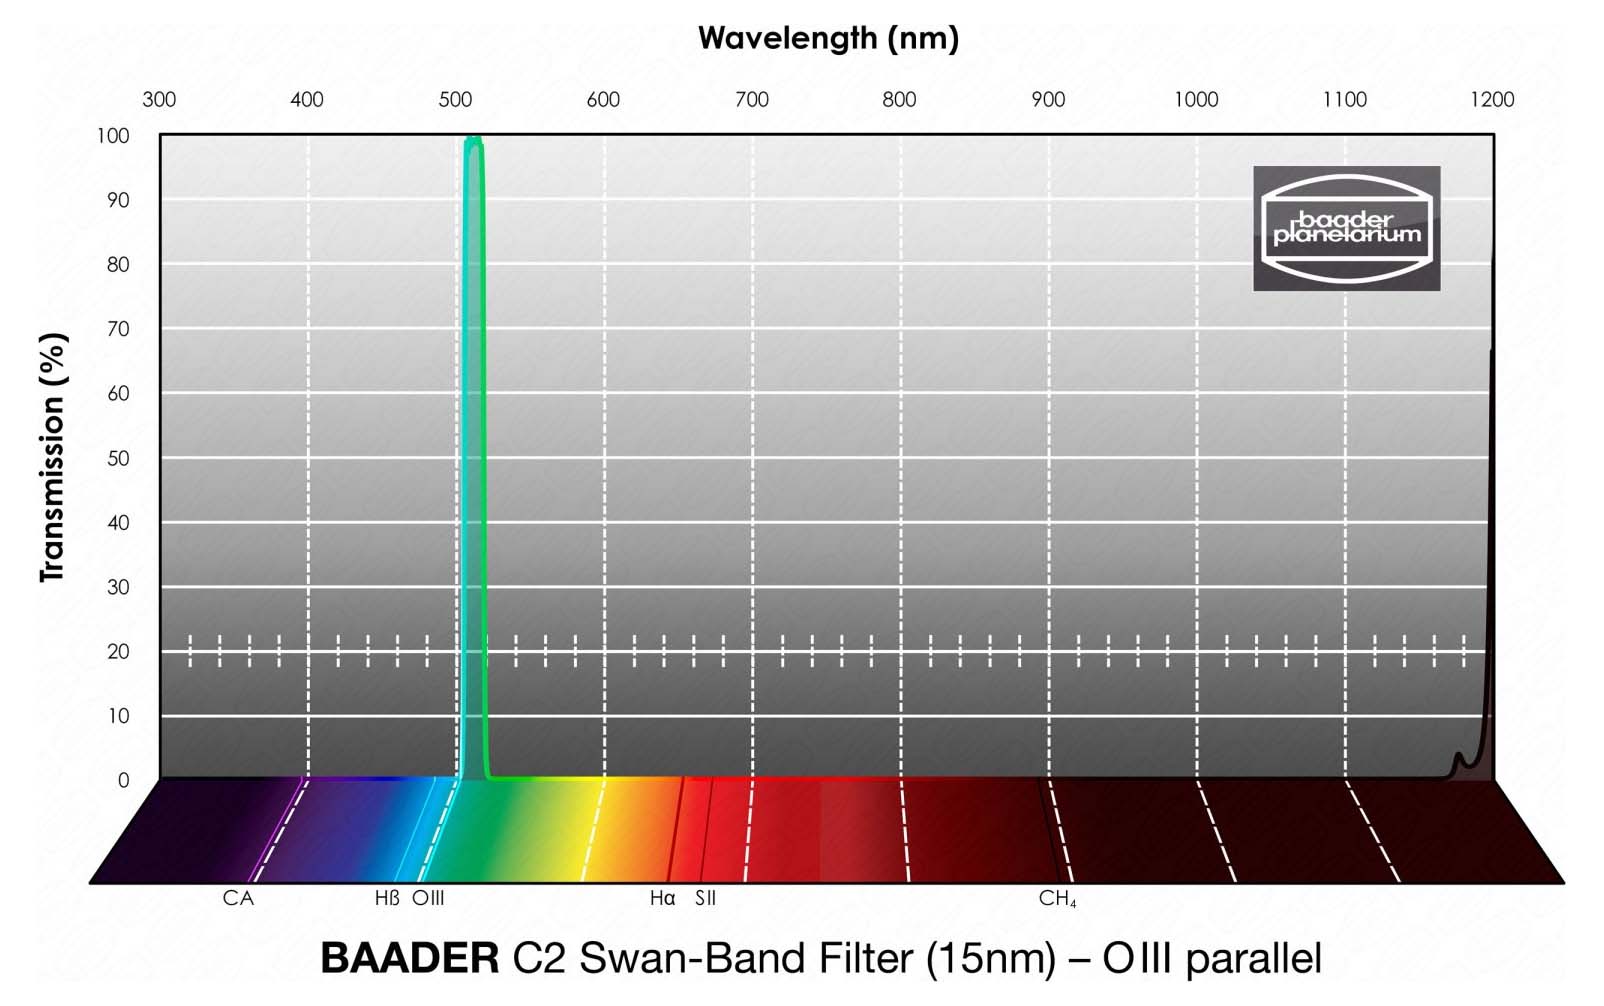 Baader C2 Swan-Band Filter (15nm) Wavelength Graph